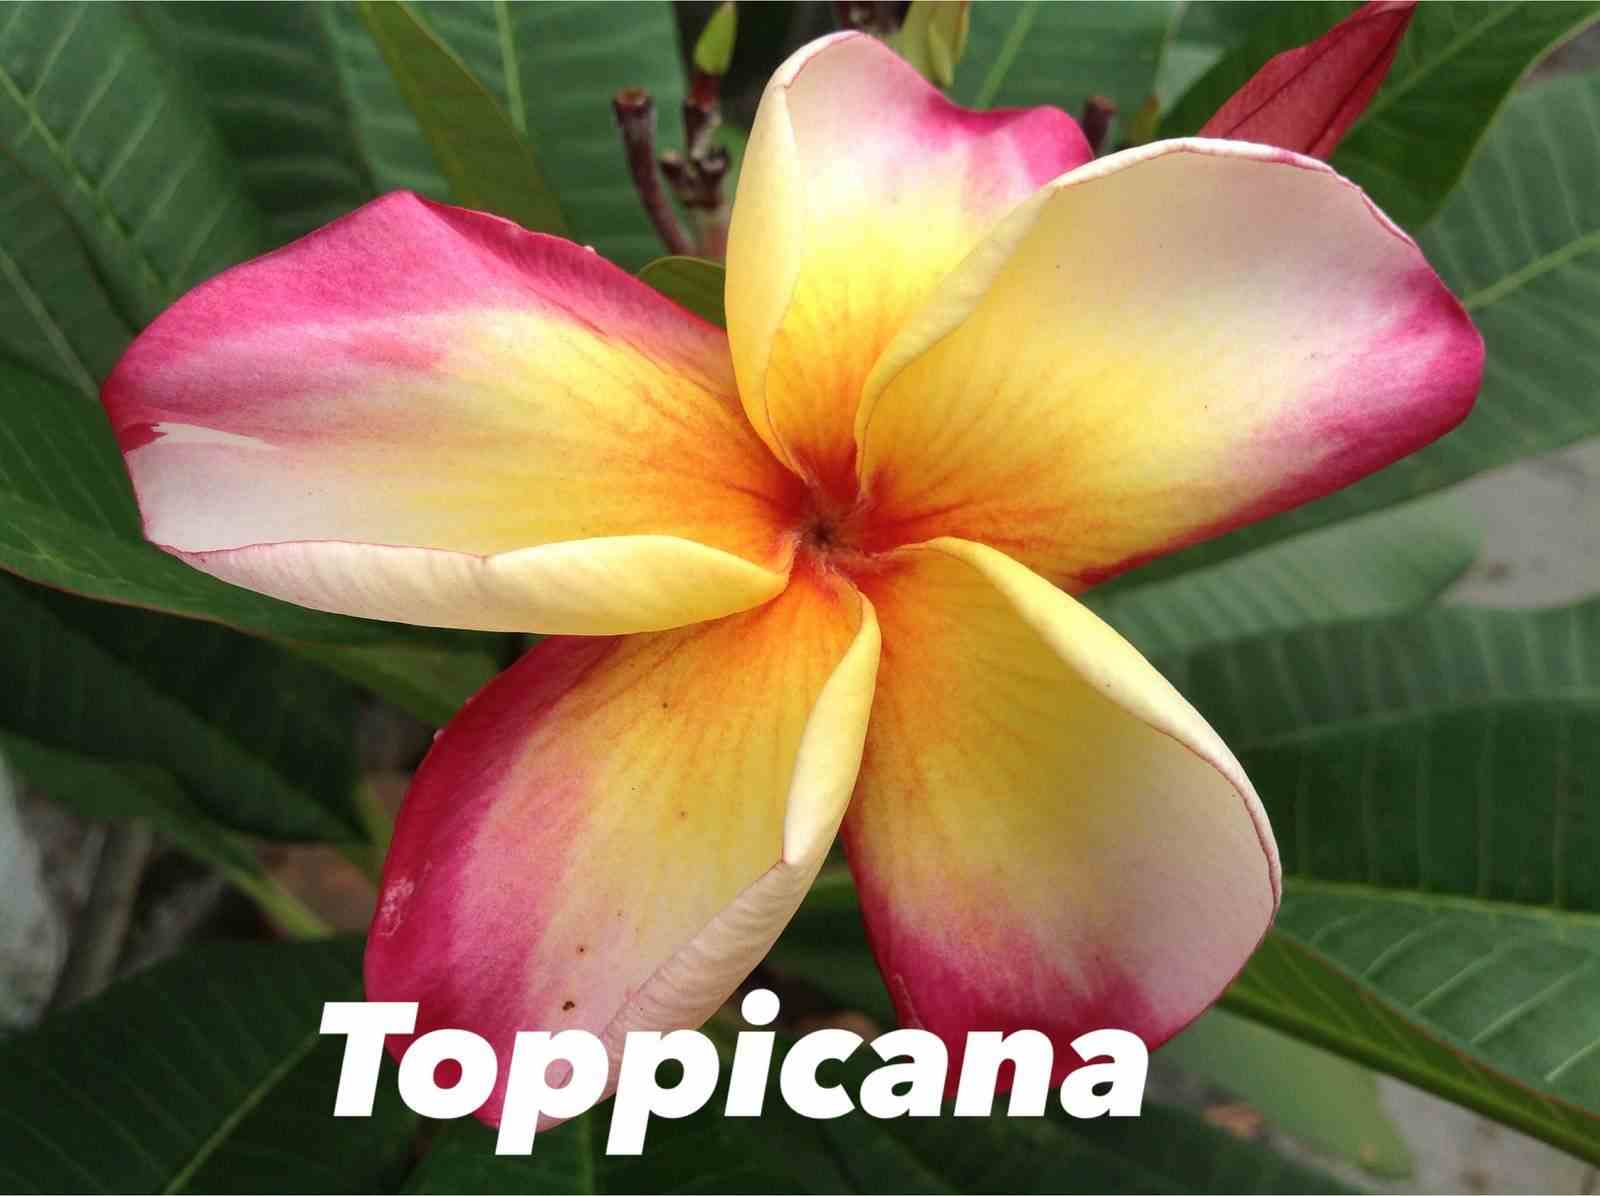 Plumeria rubra "toppicana" (frangipanier) taille pot de 2 litres ? 20/30 cm -   blanc/jaune/rose